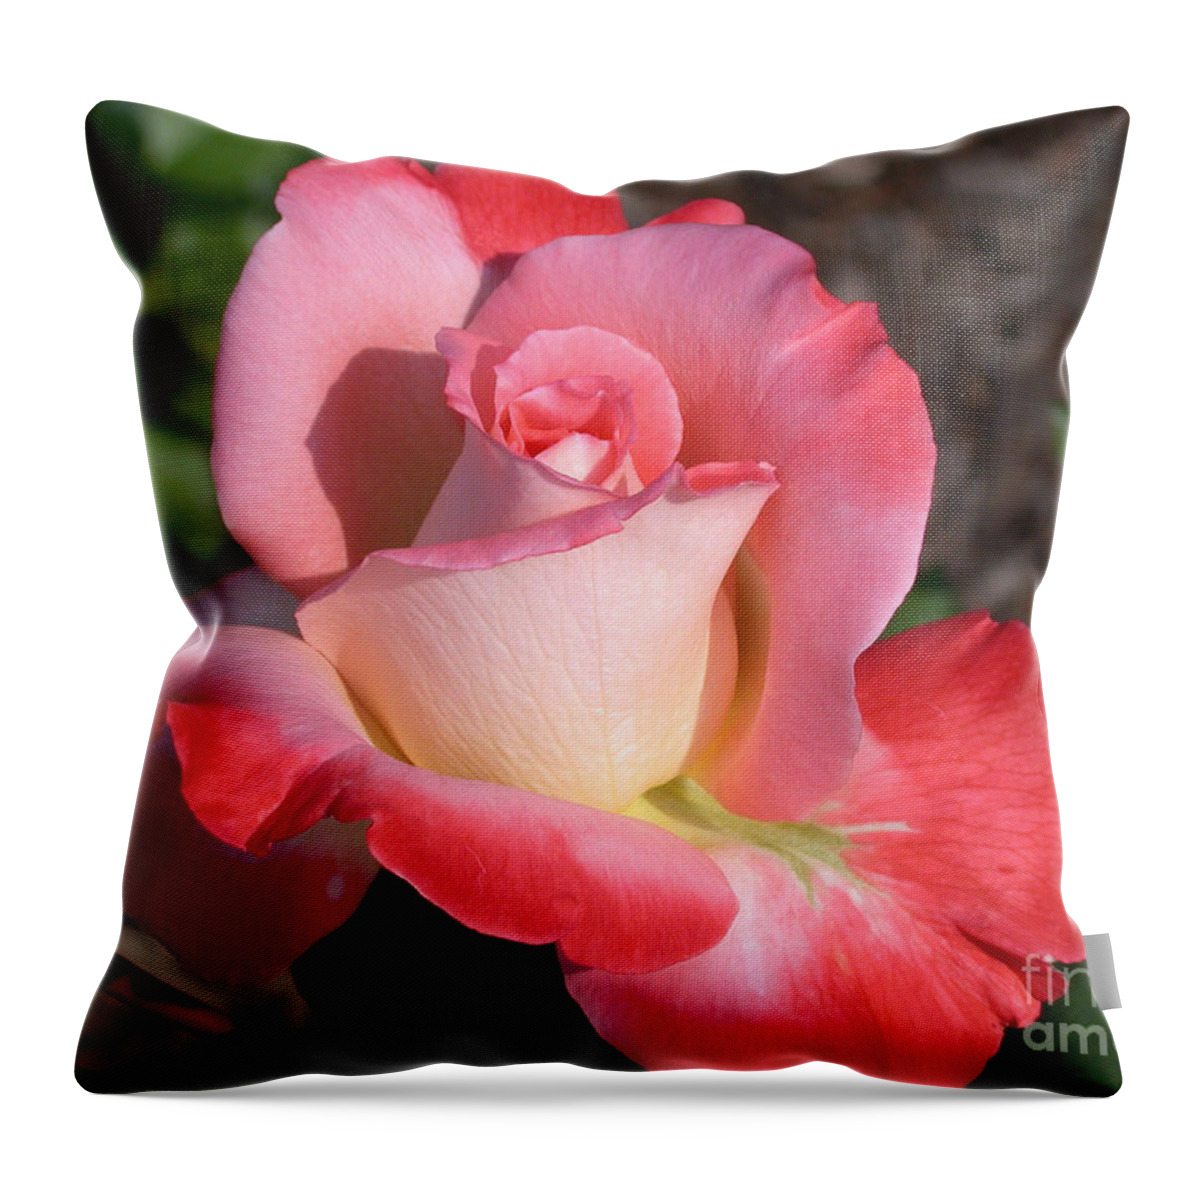 Brigadoon Rose Throw Pillow featuring the photograph Brigadoon Rose by Living Color Photography Lorraine Lynch